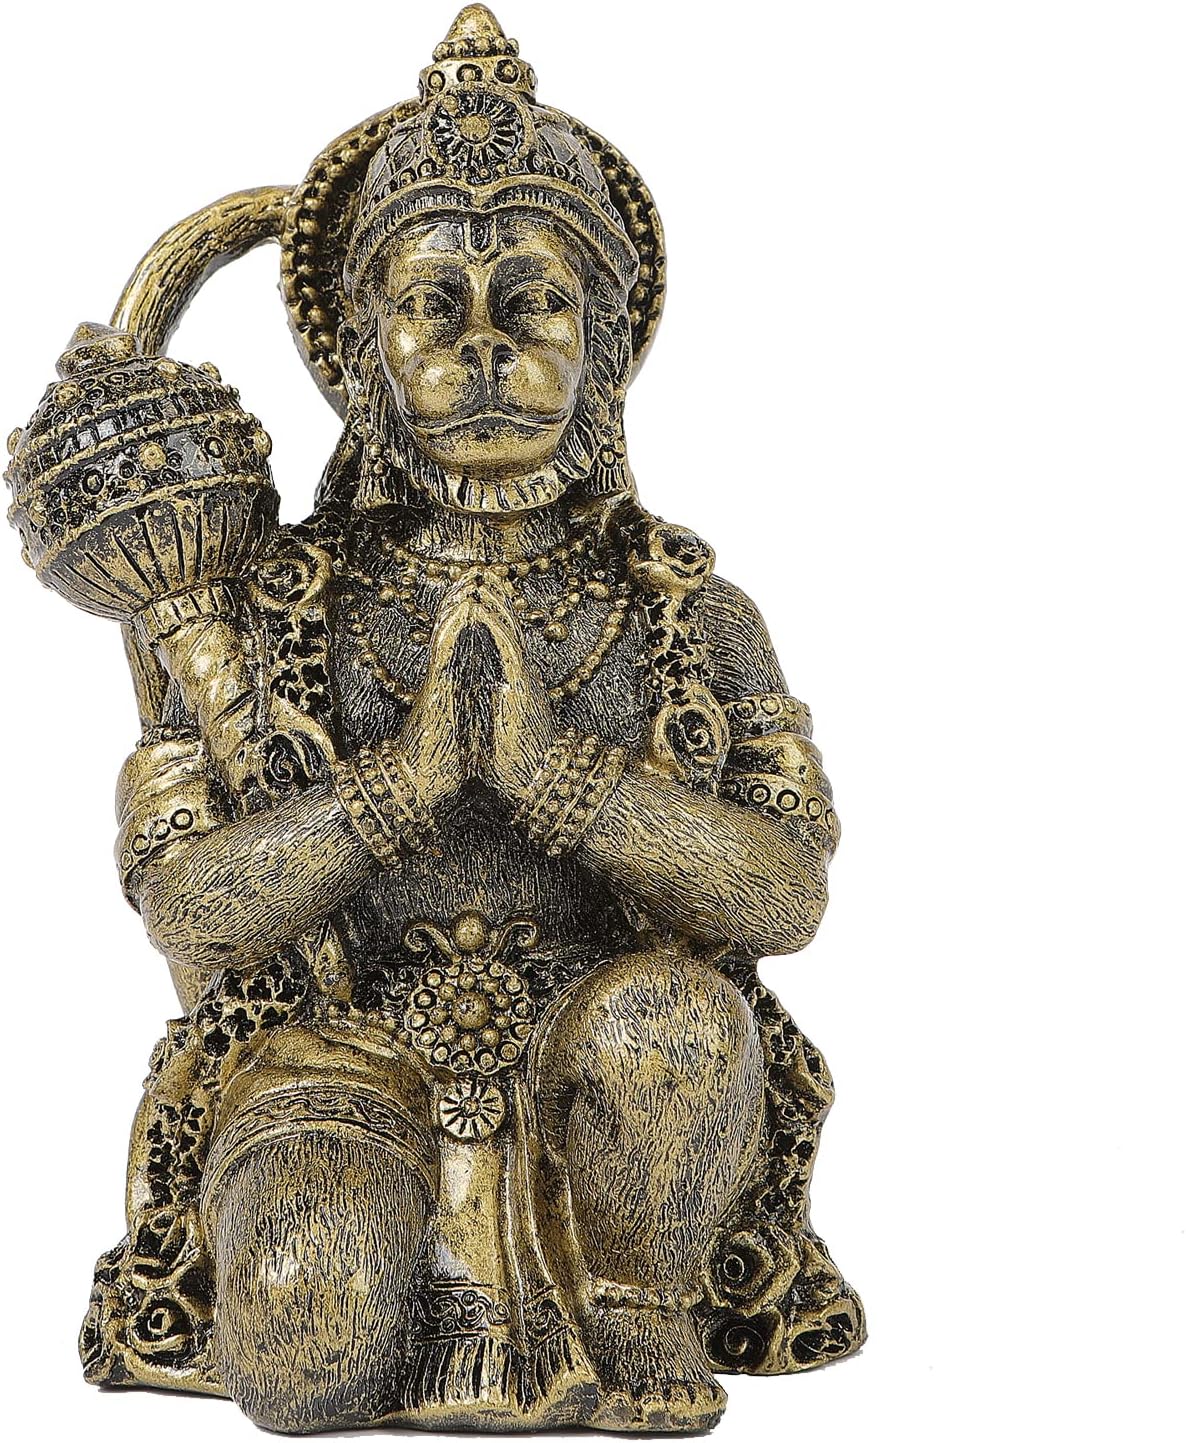 Seyee-bro Hindu God Lord Flying-Hanuman Statue - Hanuman Mythological Figurine for Home Temple Mandir Decor